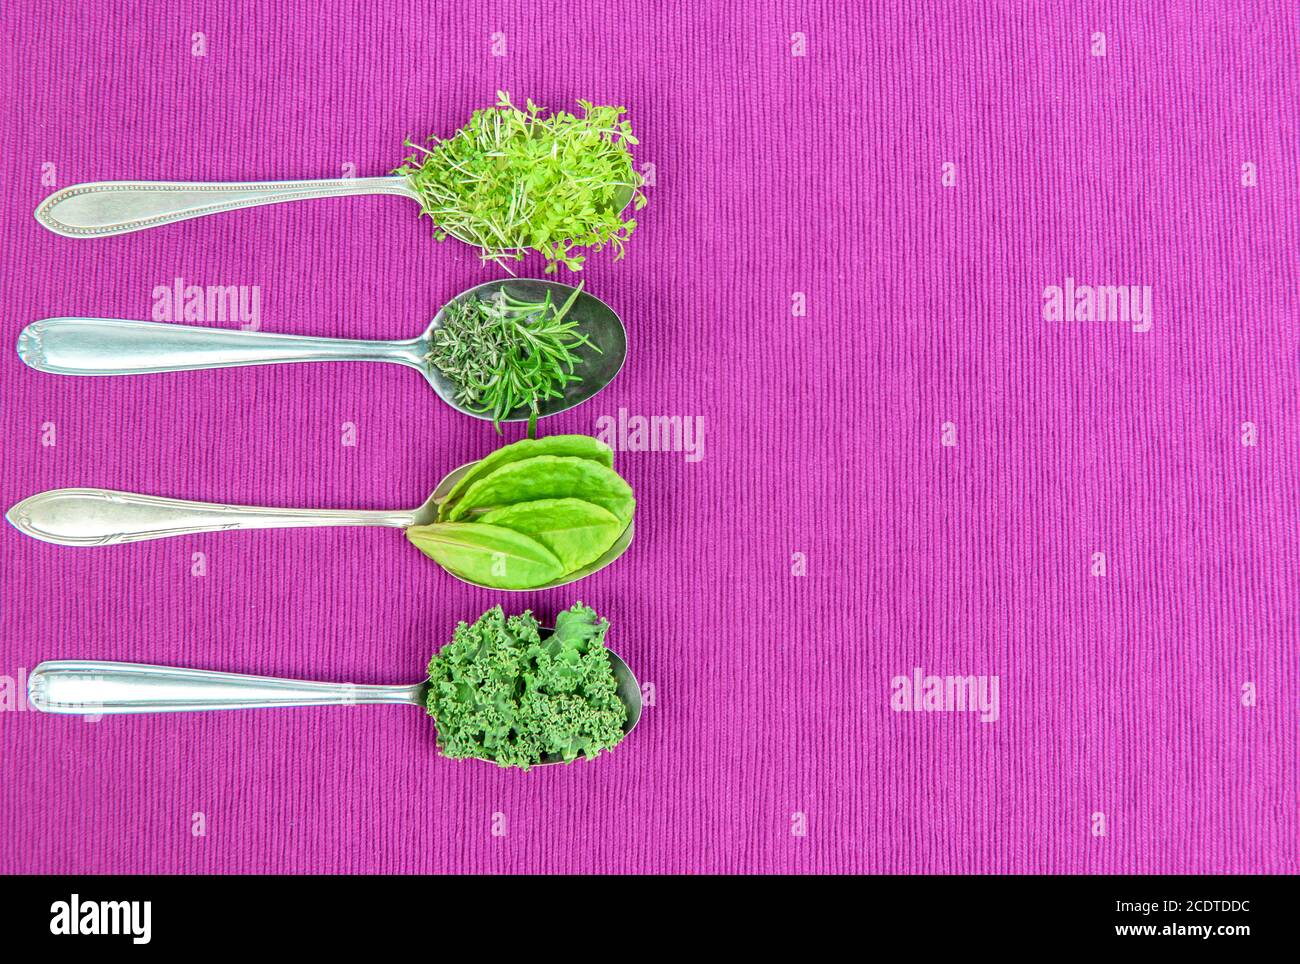 Vitamins - various herbs on spoons Stock Photo